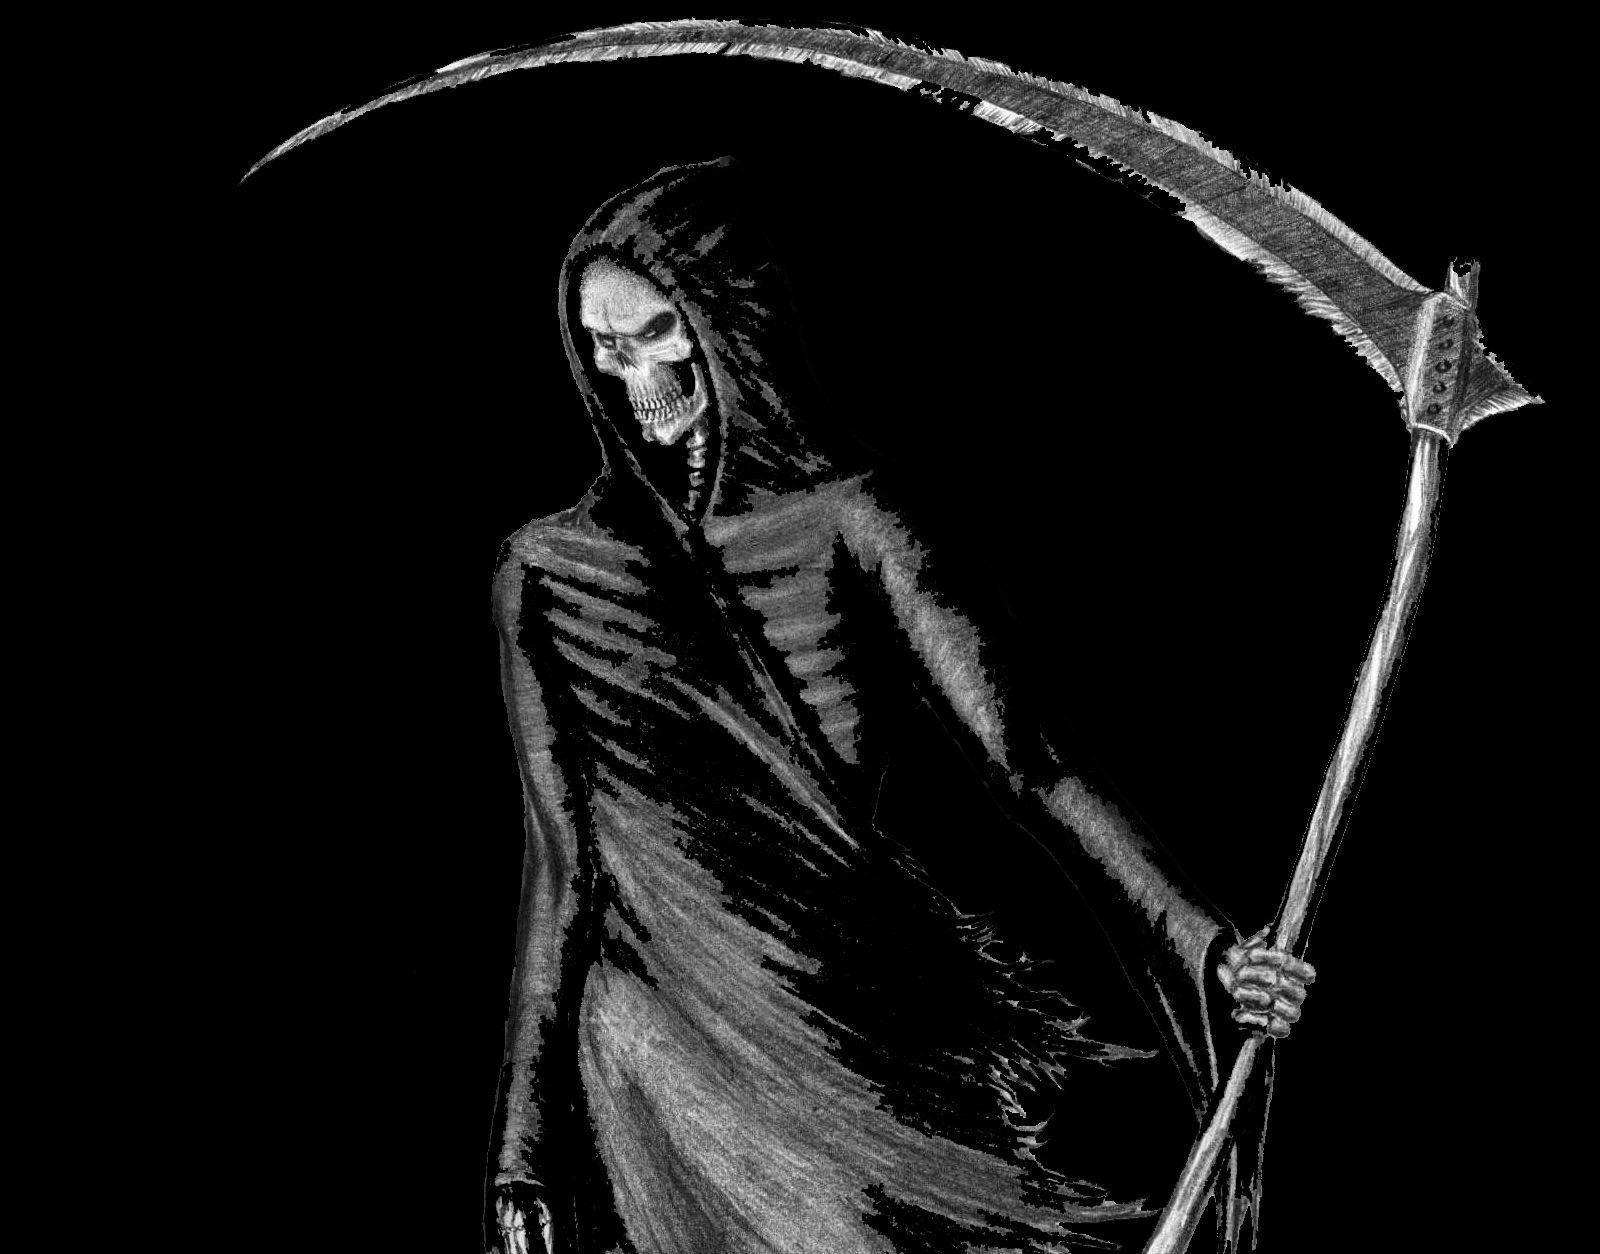 grim reaper hd wallpaper